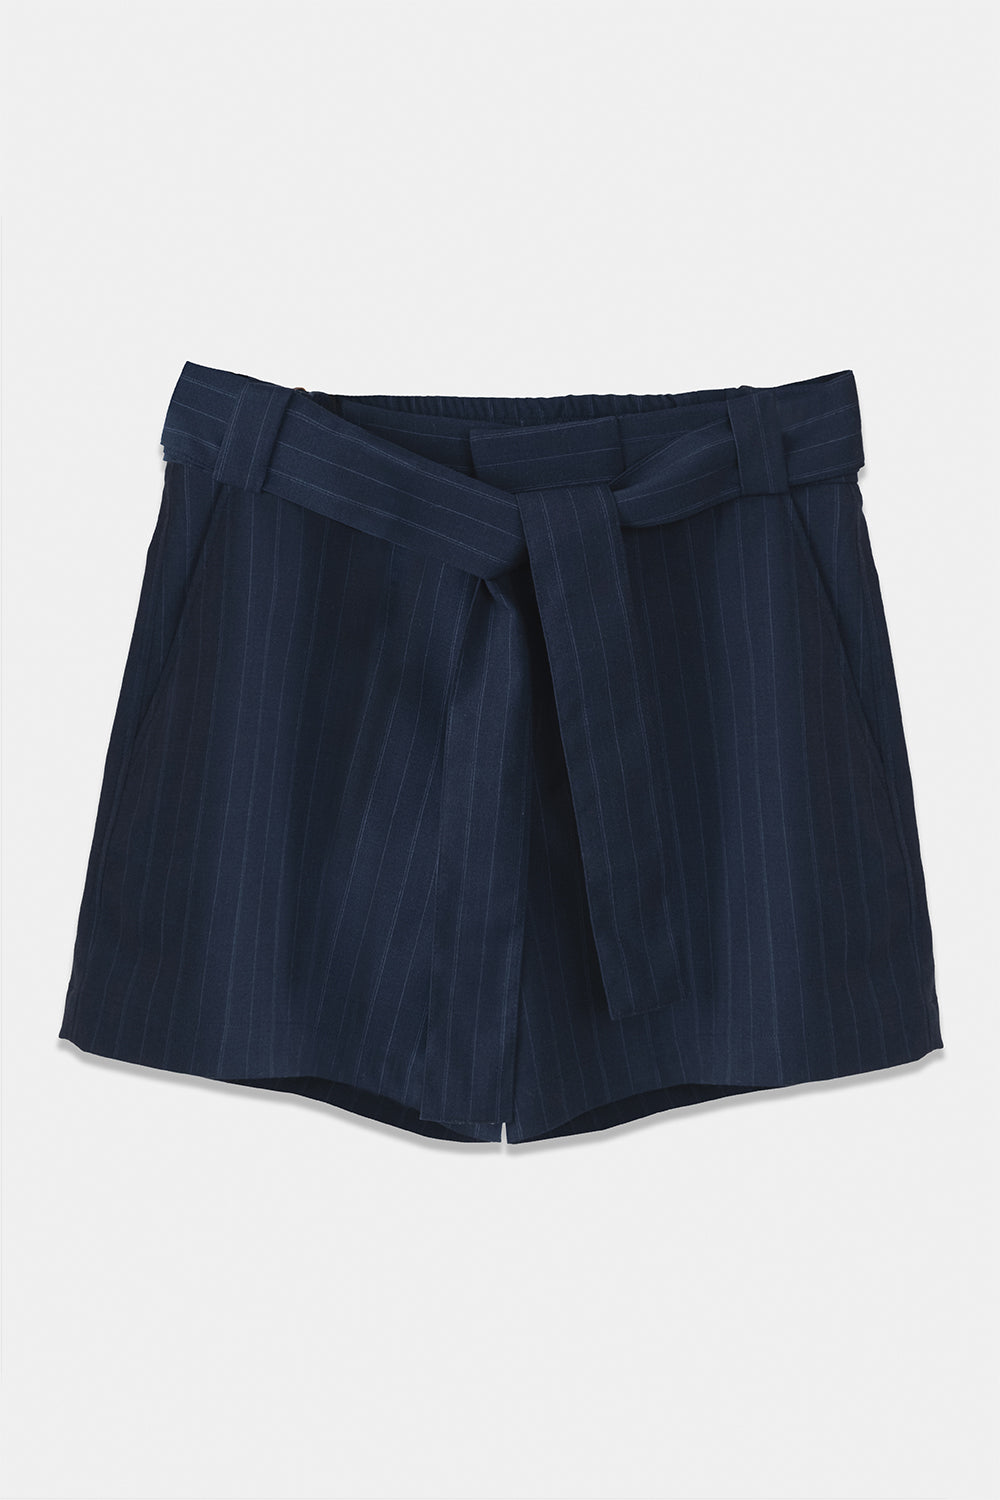 SEANNUNG - MEN - Belted Shorts 帶環短褲